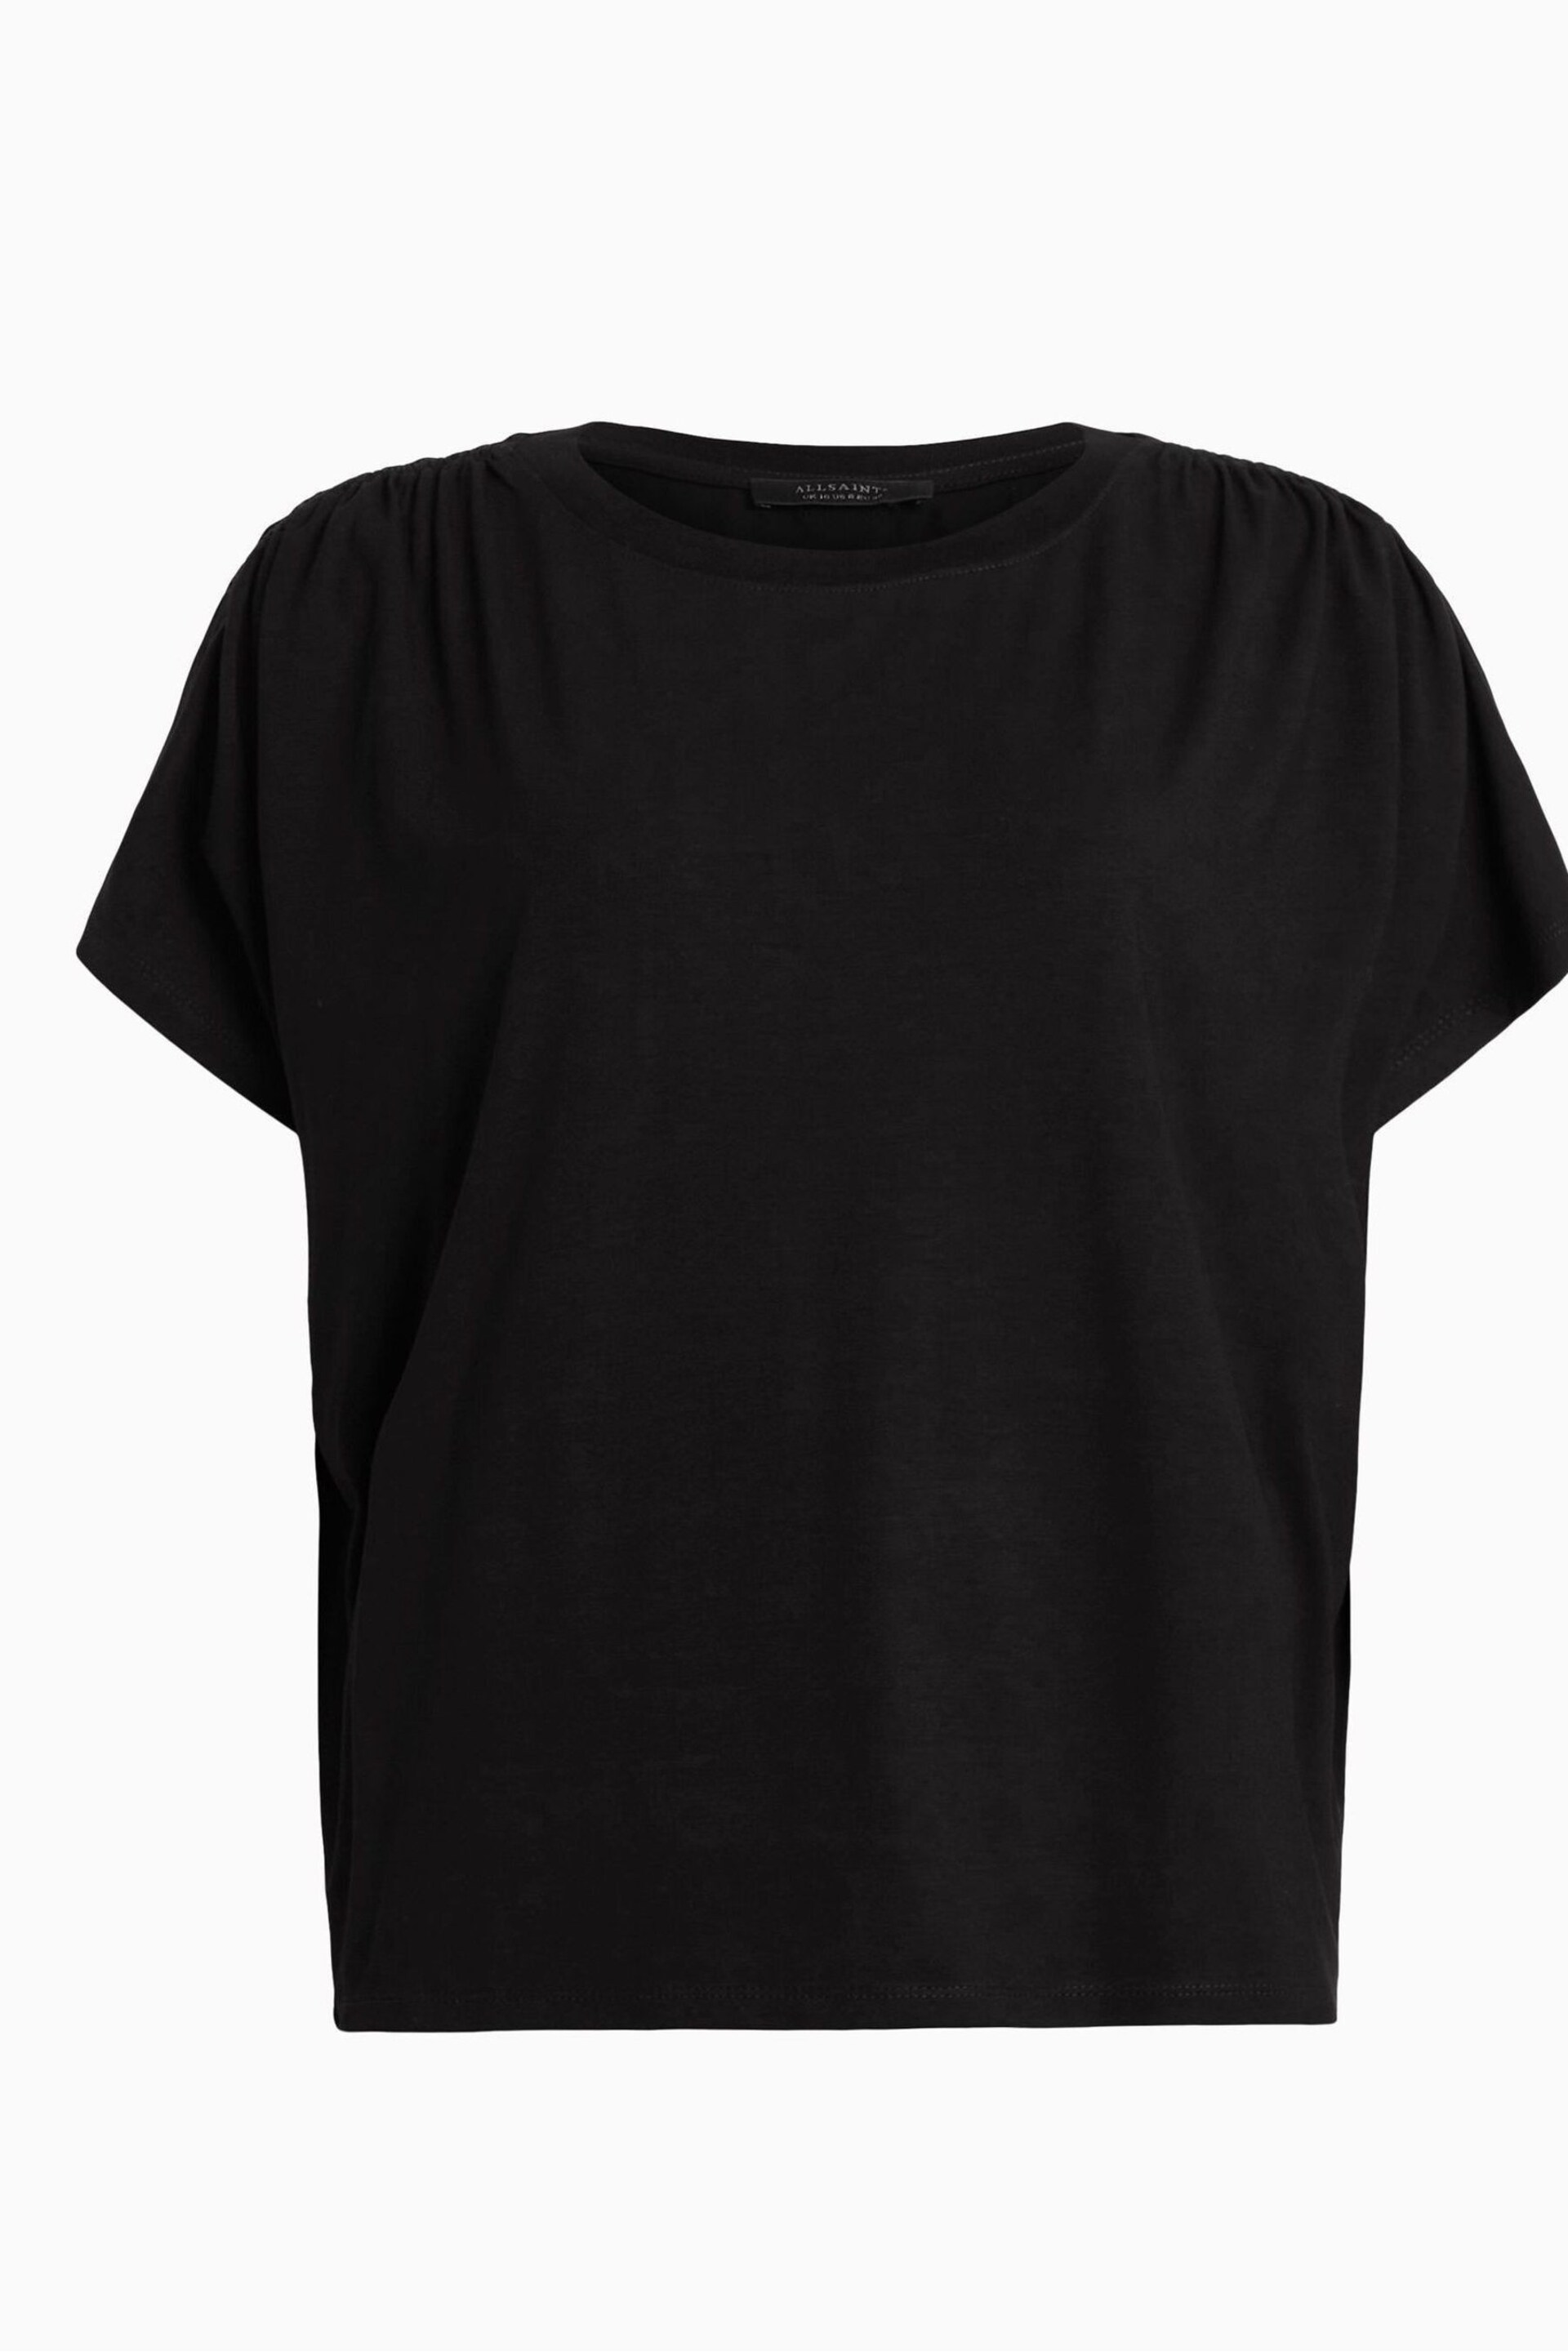 AllSaints Black Natalie T-Shirt - Image 7 of 7